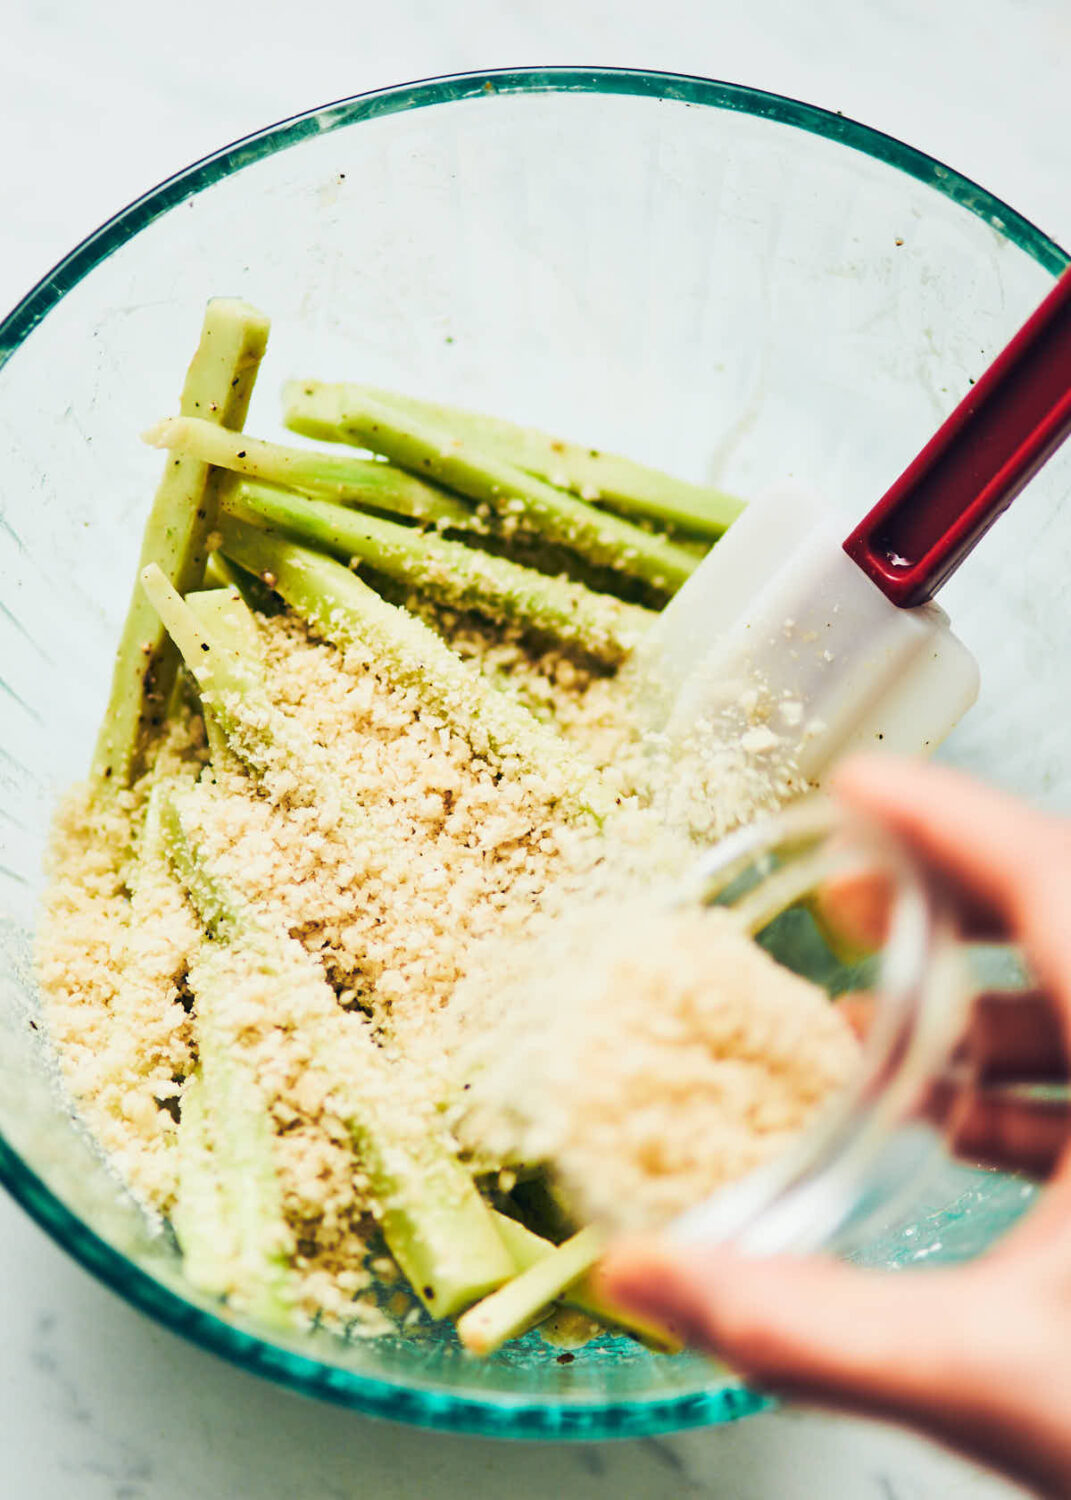 Coating cut broccoli stalks with panko breadcrumb mixture